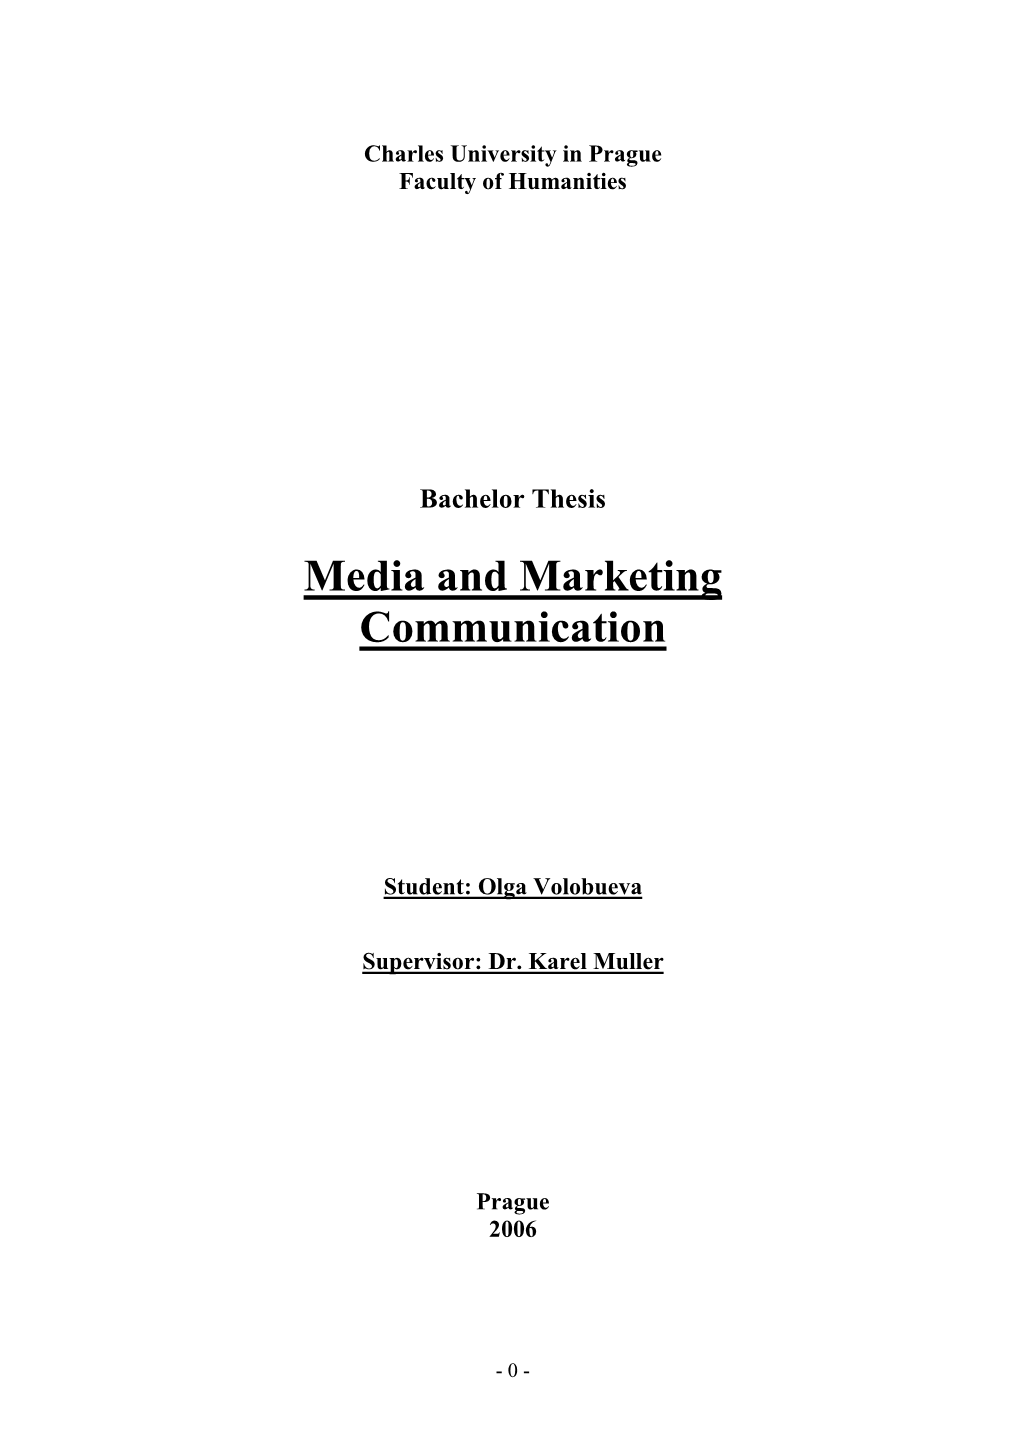 Media and Marketing Communication